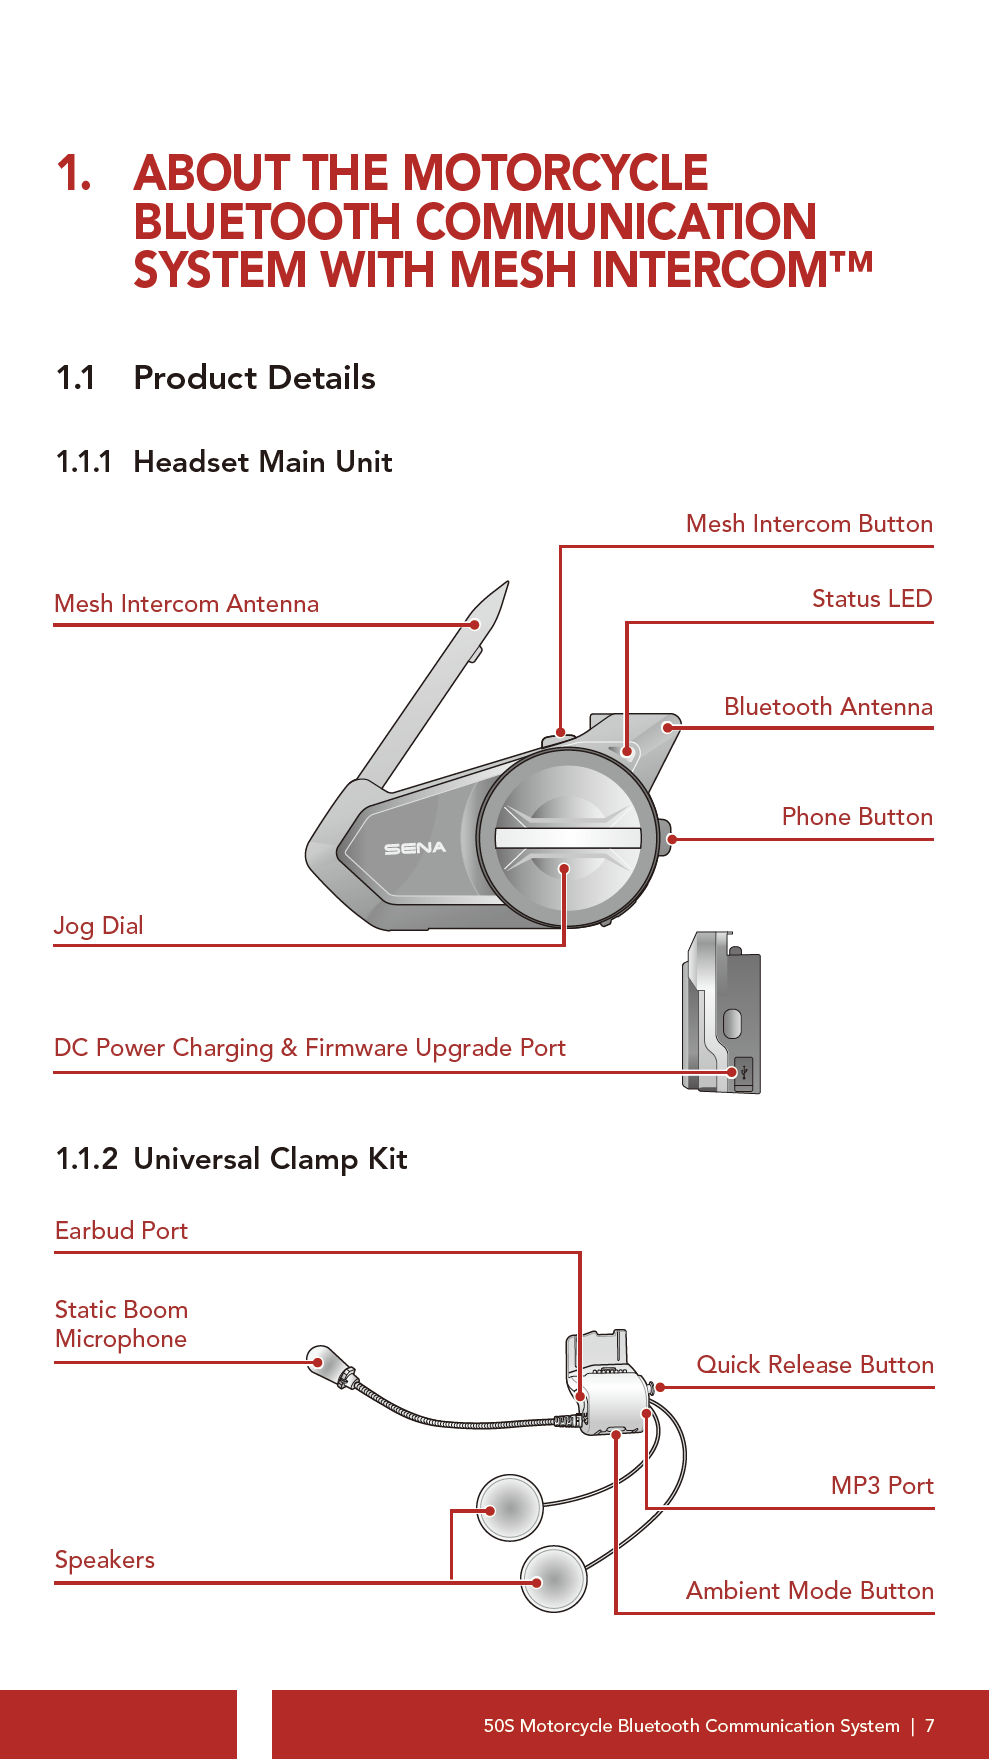 Triumph Sena Bluetooth headset